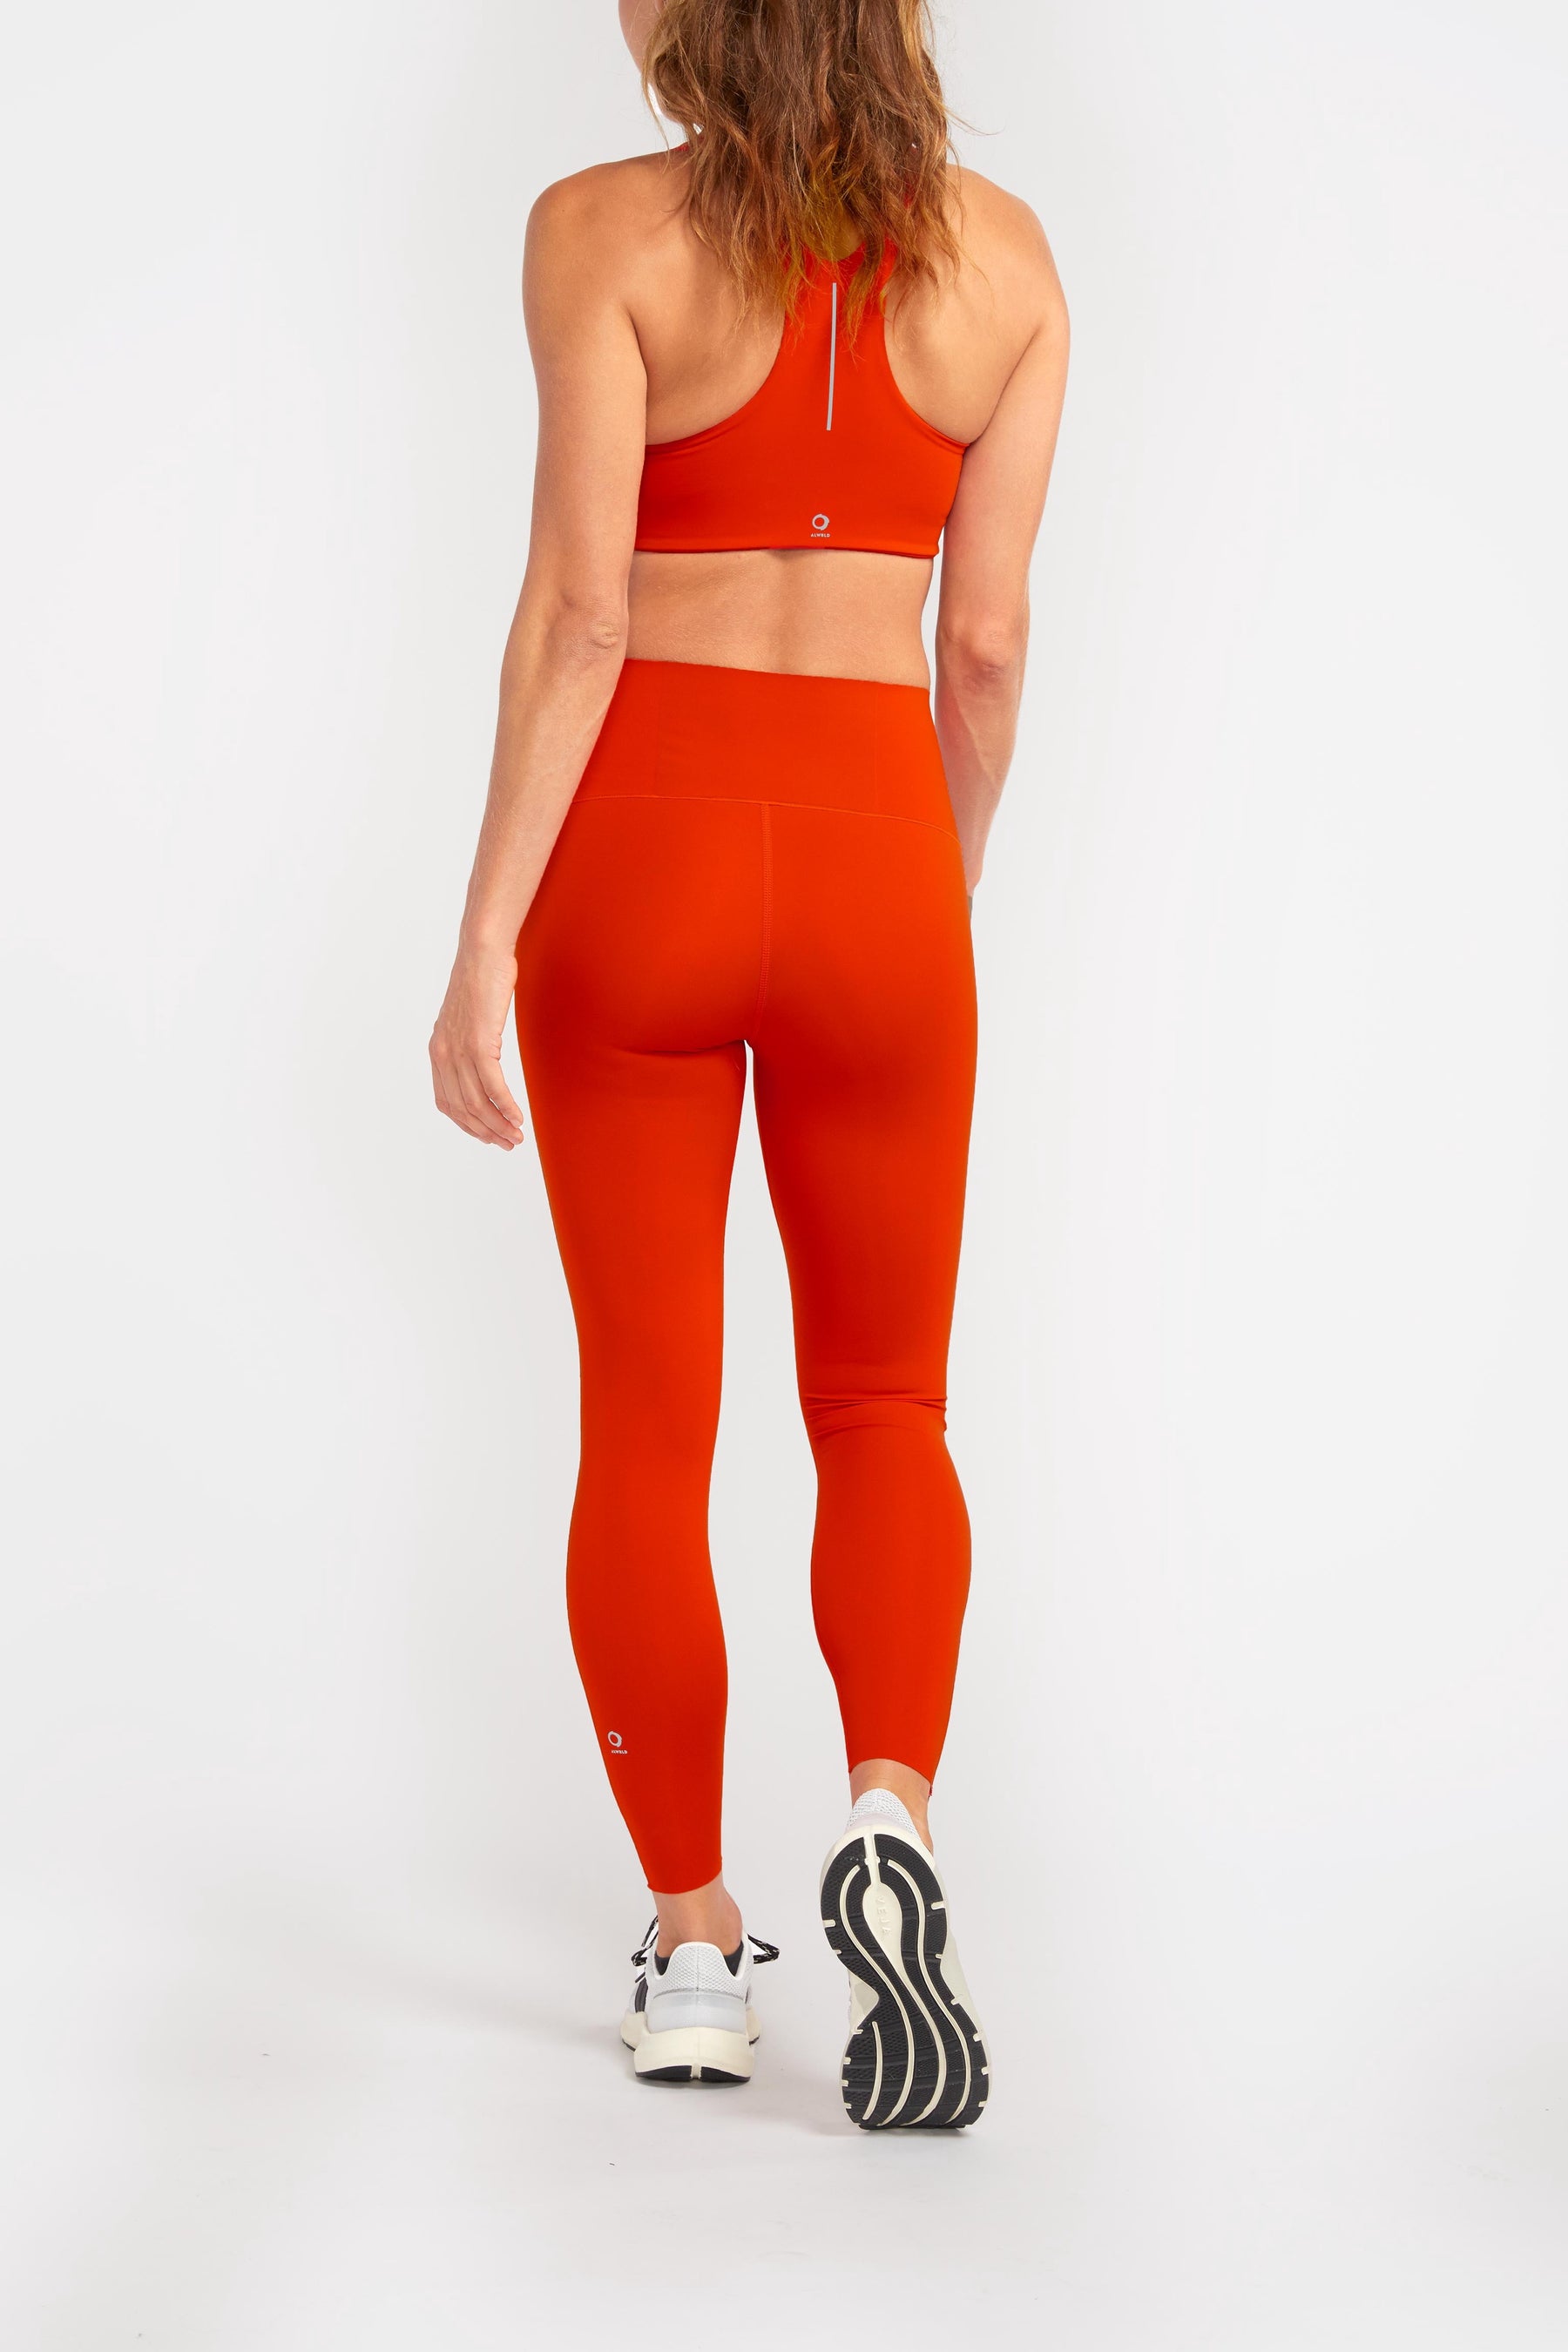 eco friendly bright red athleticwear leggings